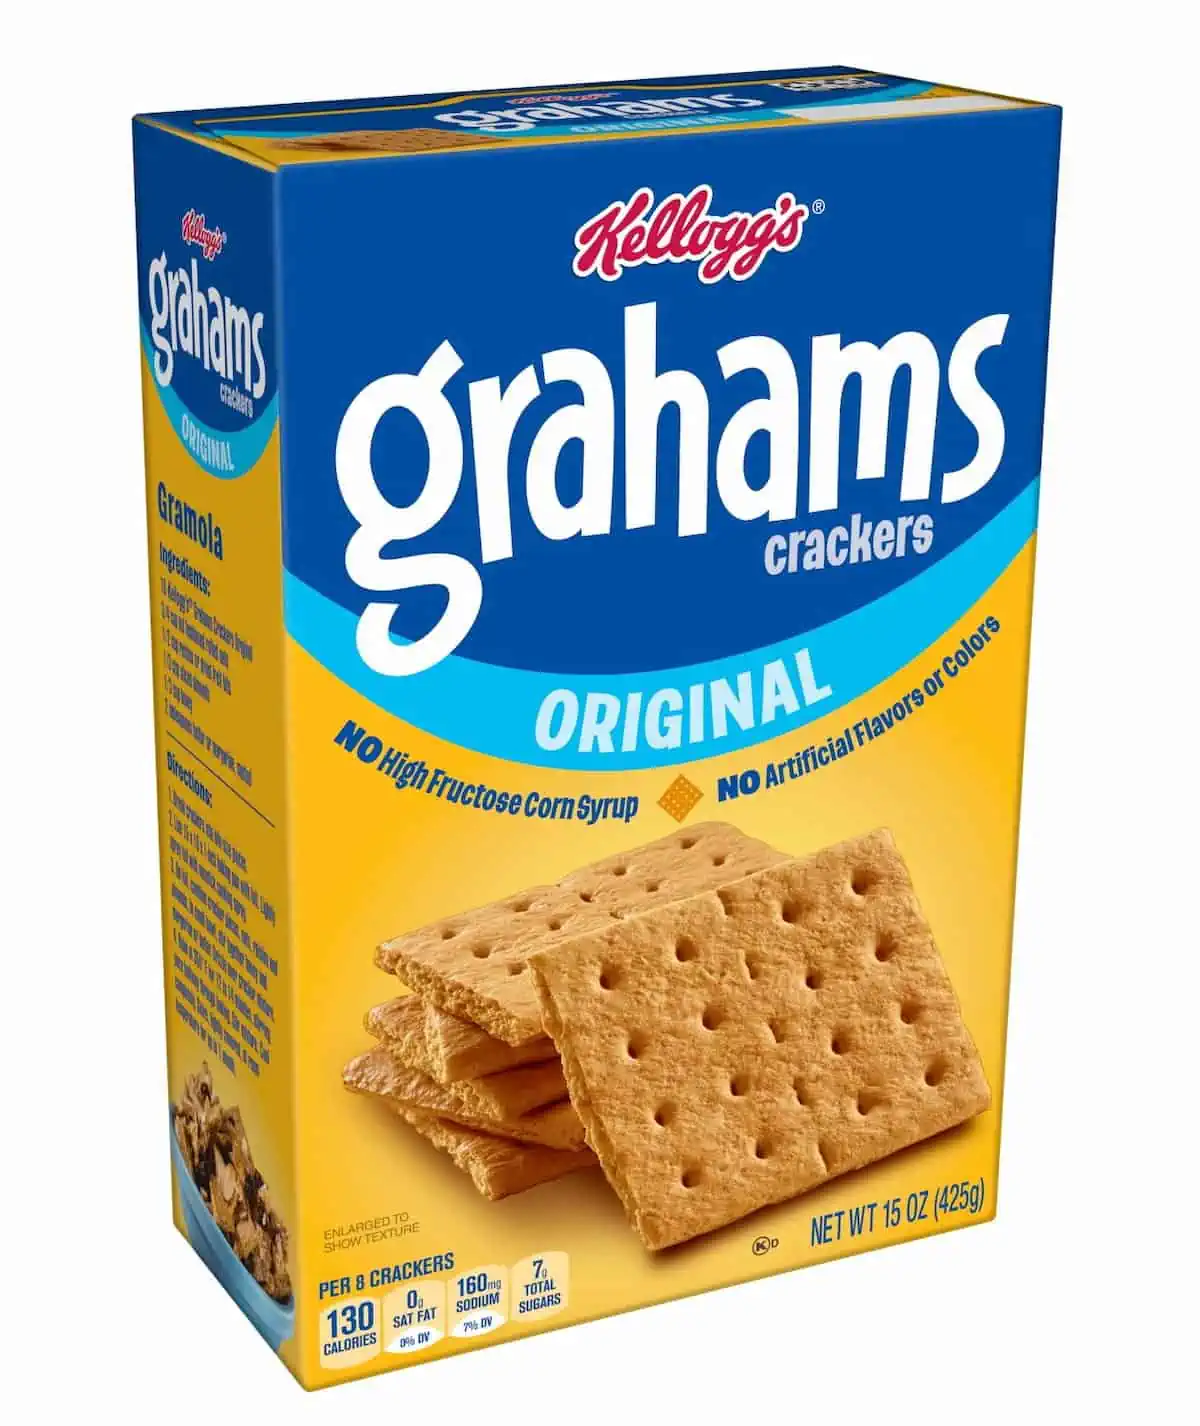 A box of Kellog's brand vegan graham crackers.